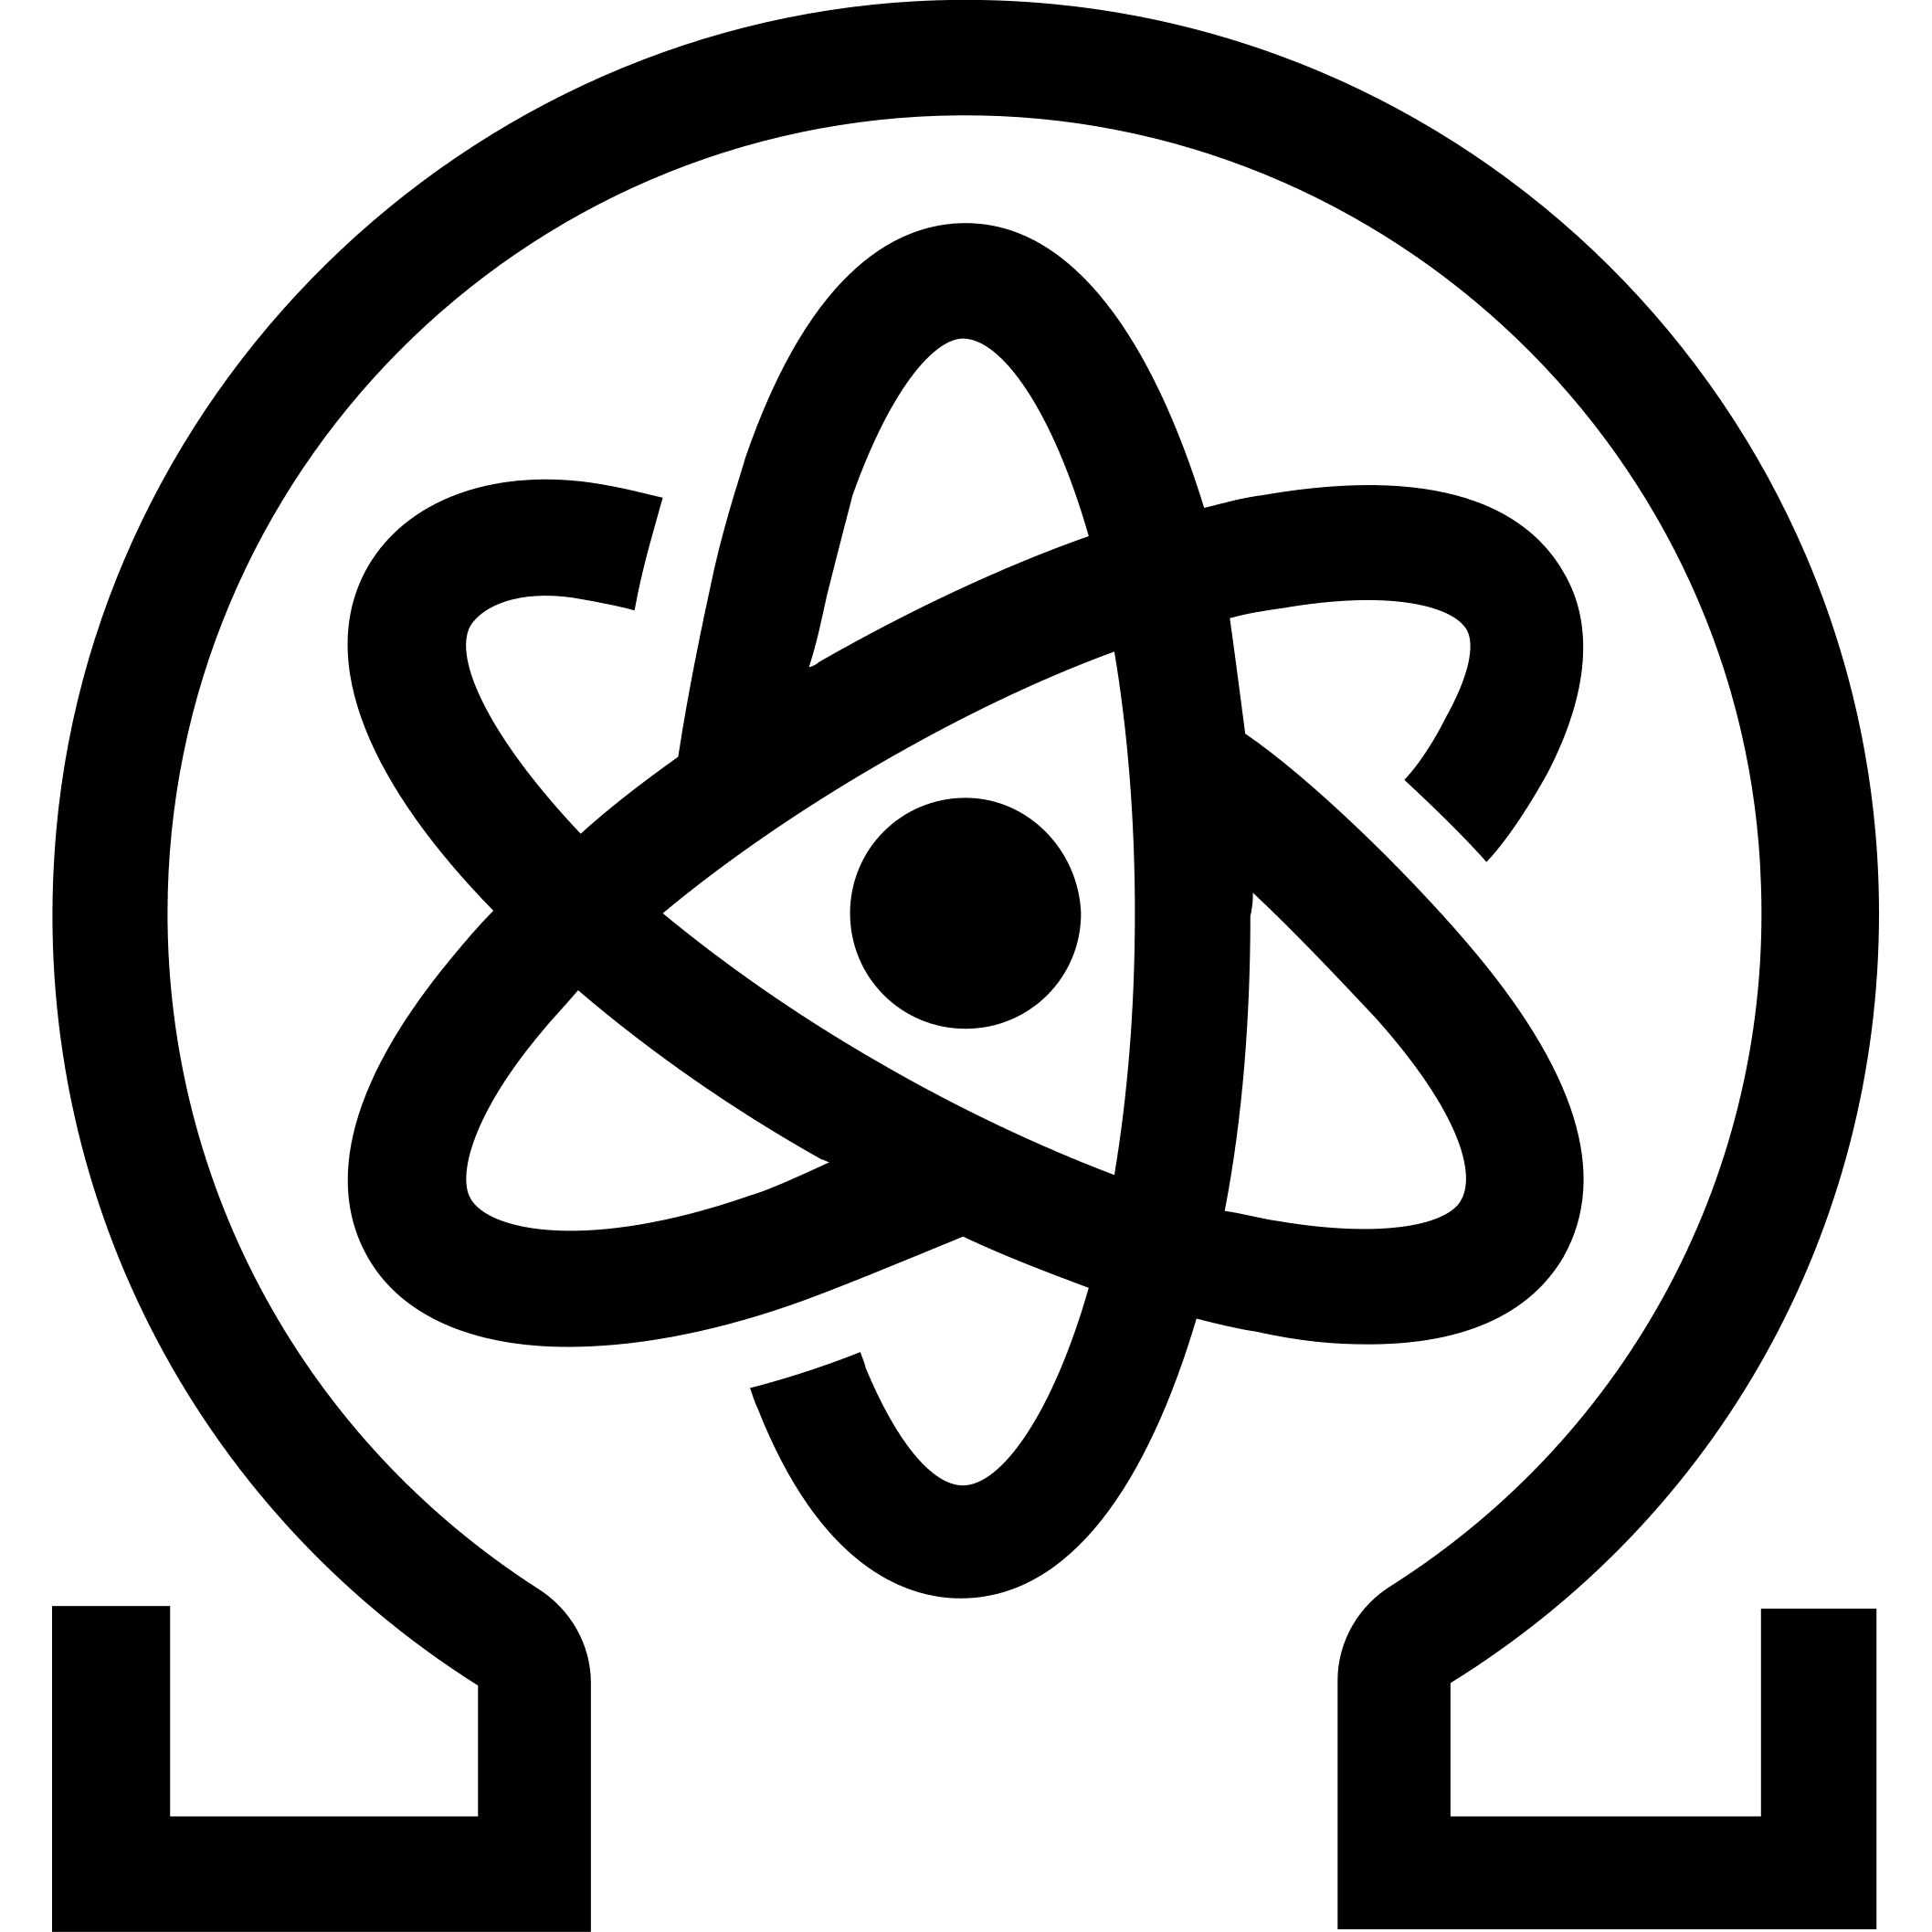 Quantum Resistant Ledger logo in png format